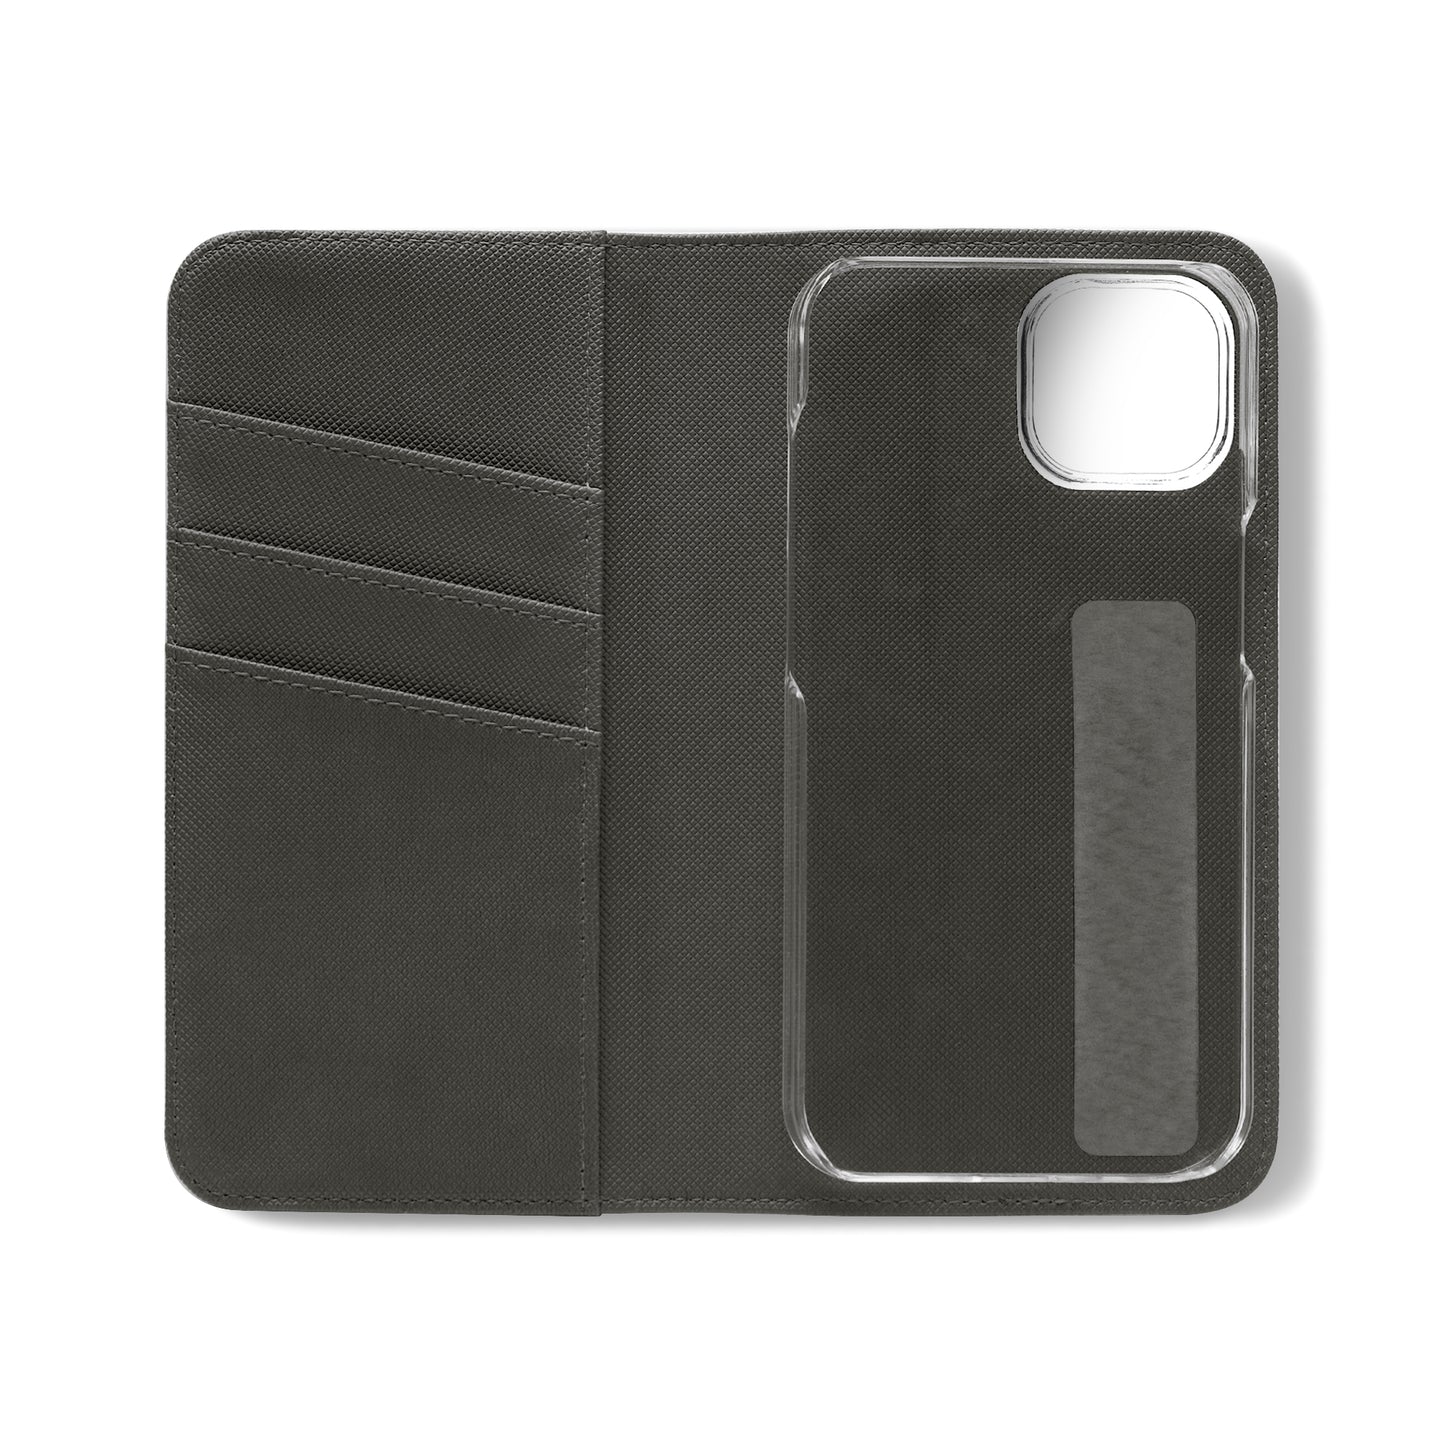 Phone Flip Cases - Equestrian Flip phone case - Horse design phone case - Stamina - Ghost Wallet phone case